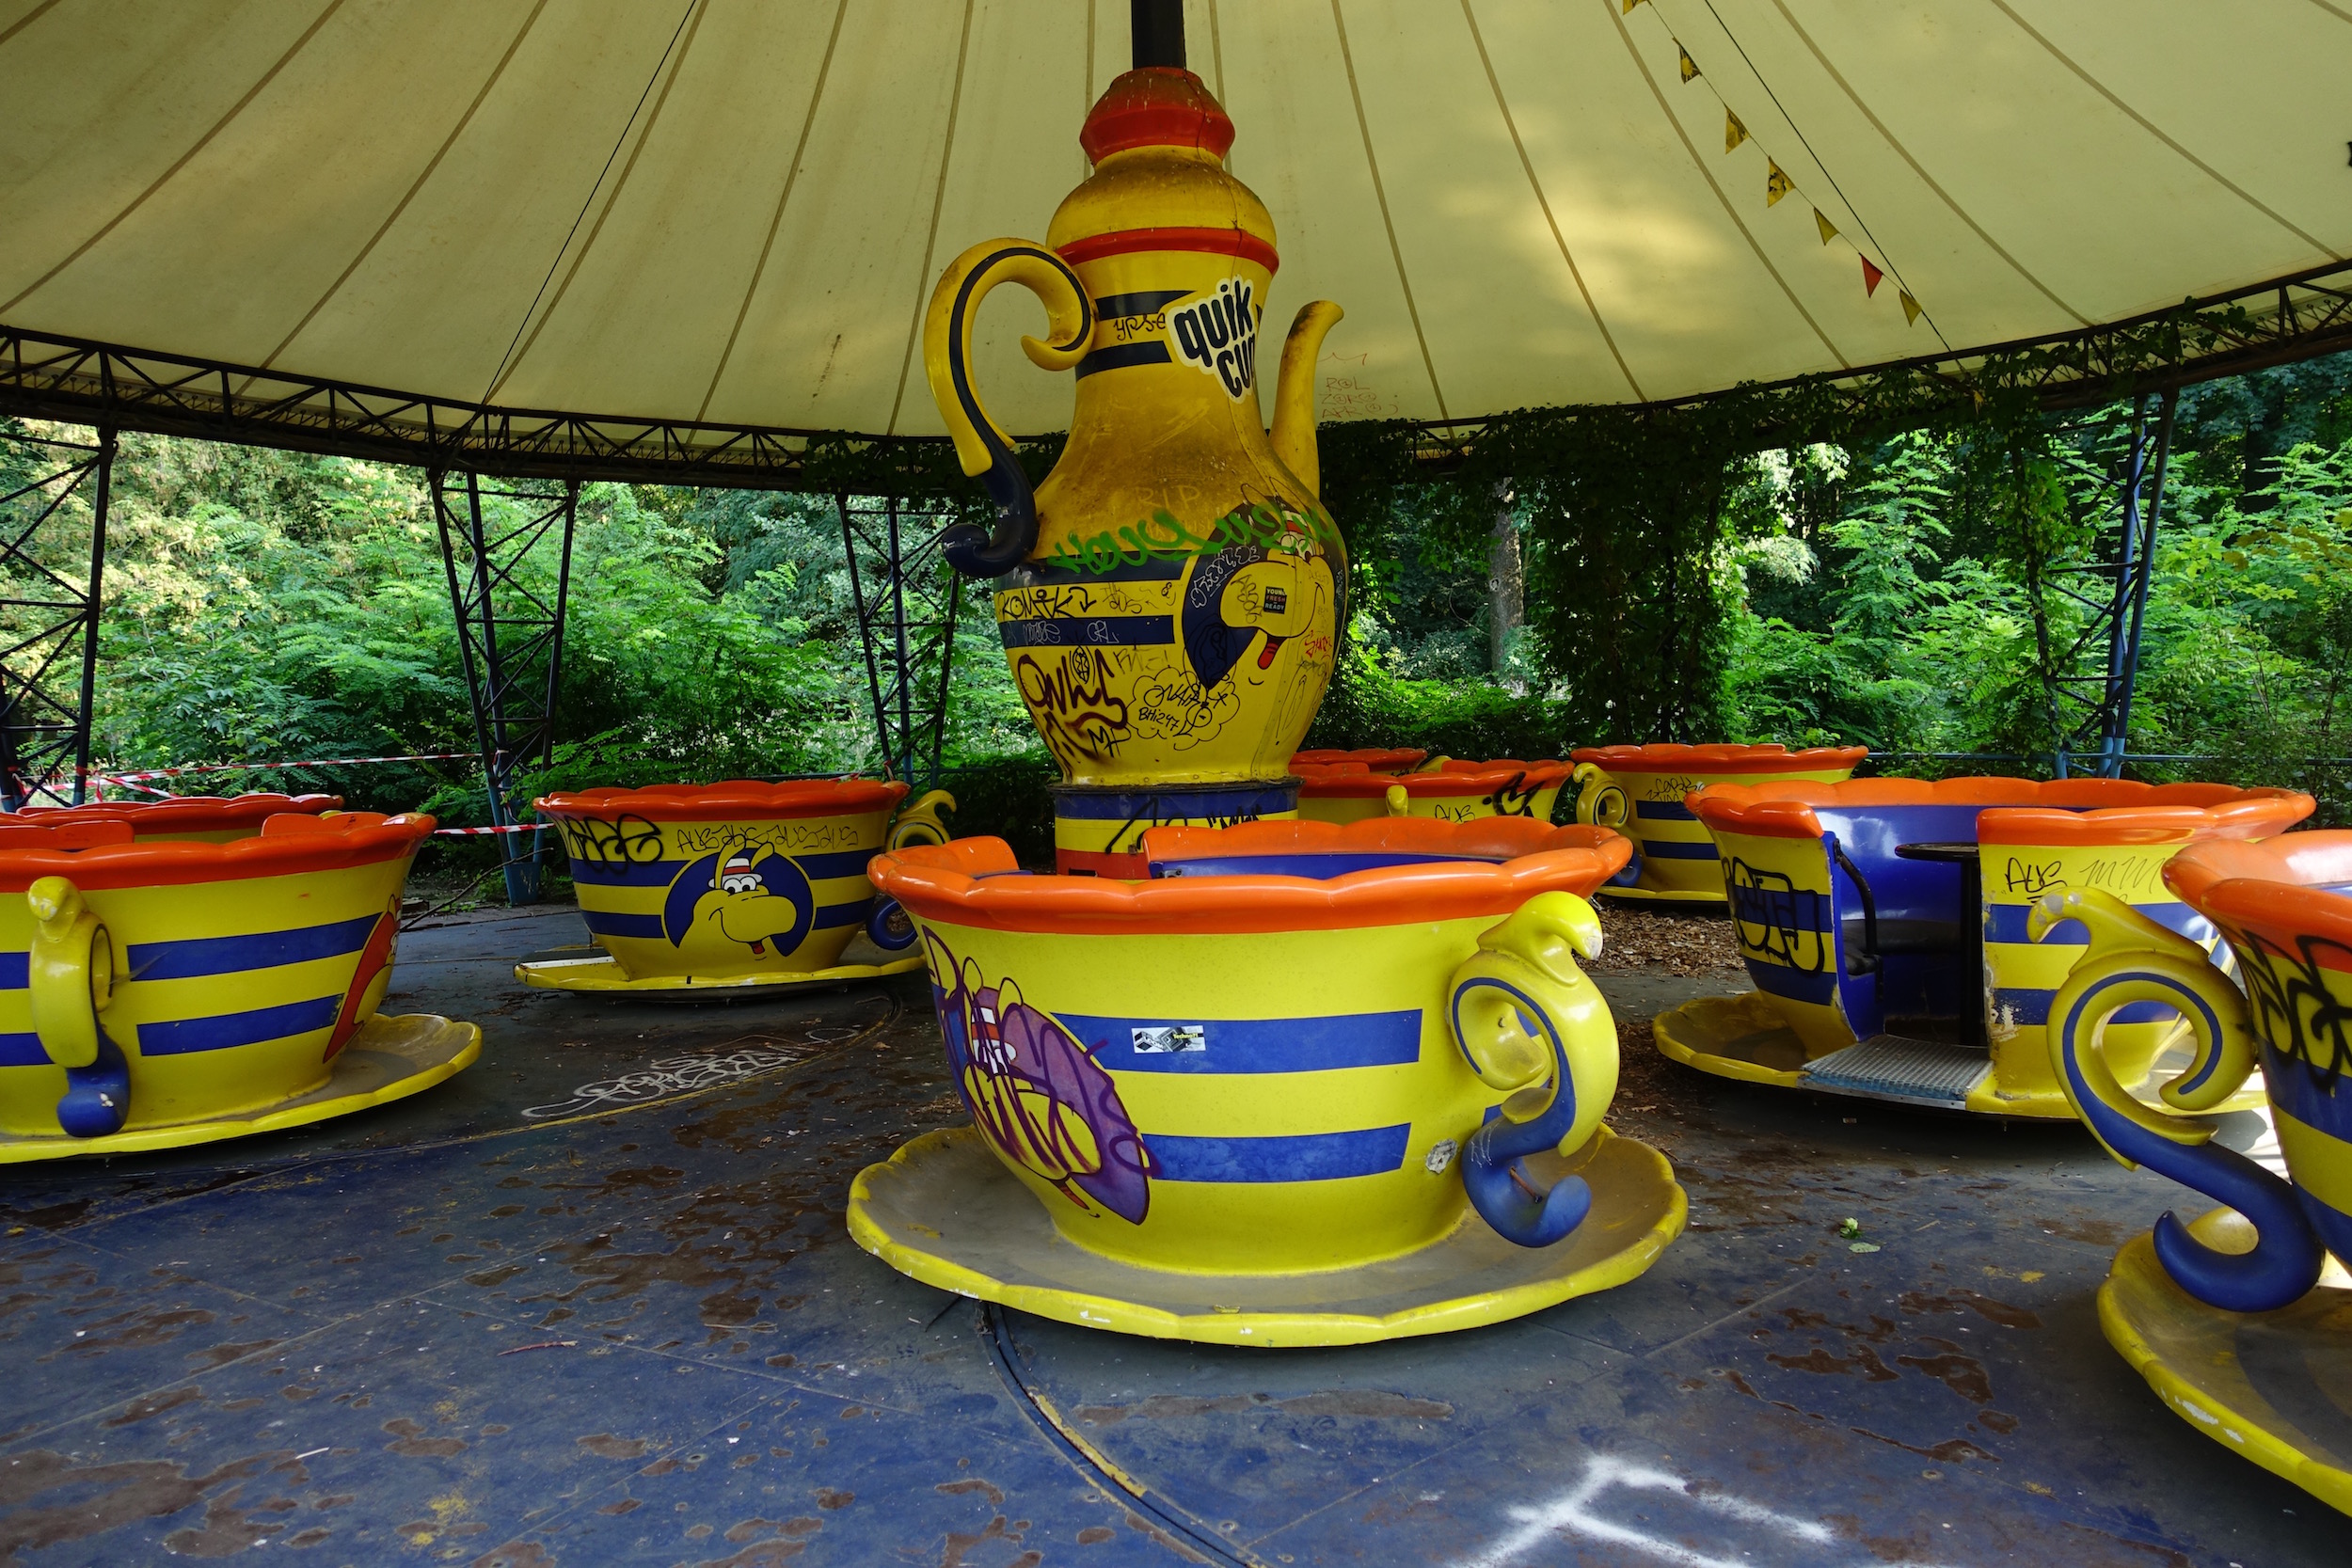 The abandoned tea cupsg